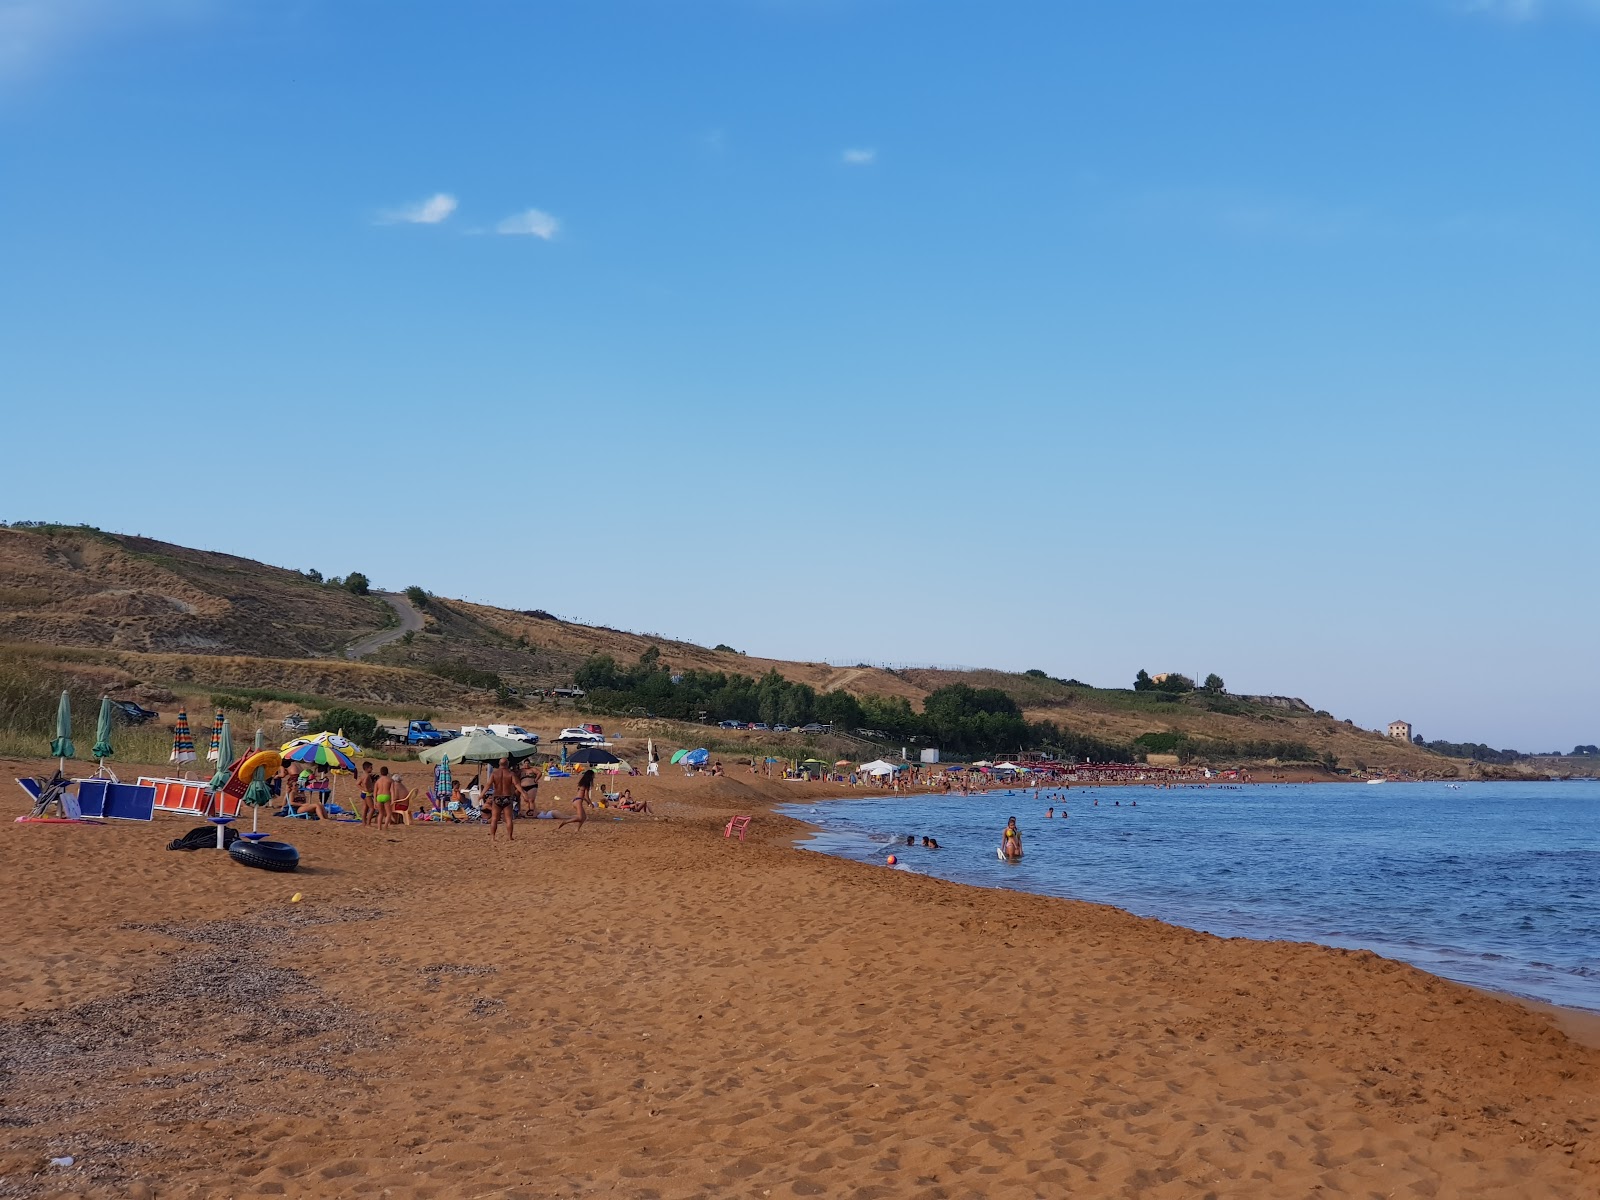 Spiaggia di Marinella'in fotoğrafı vahşi alan